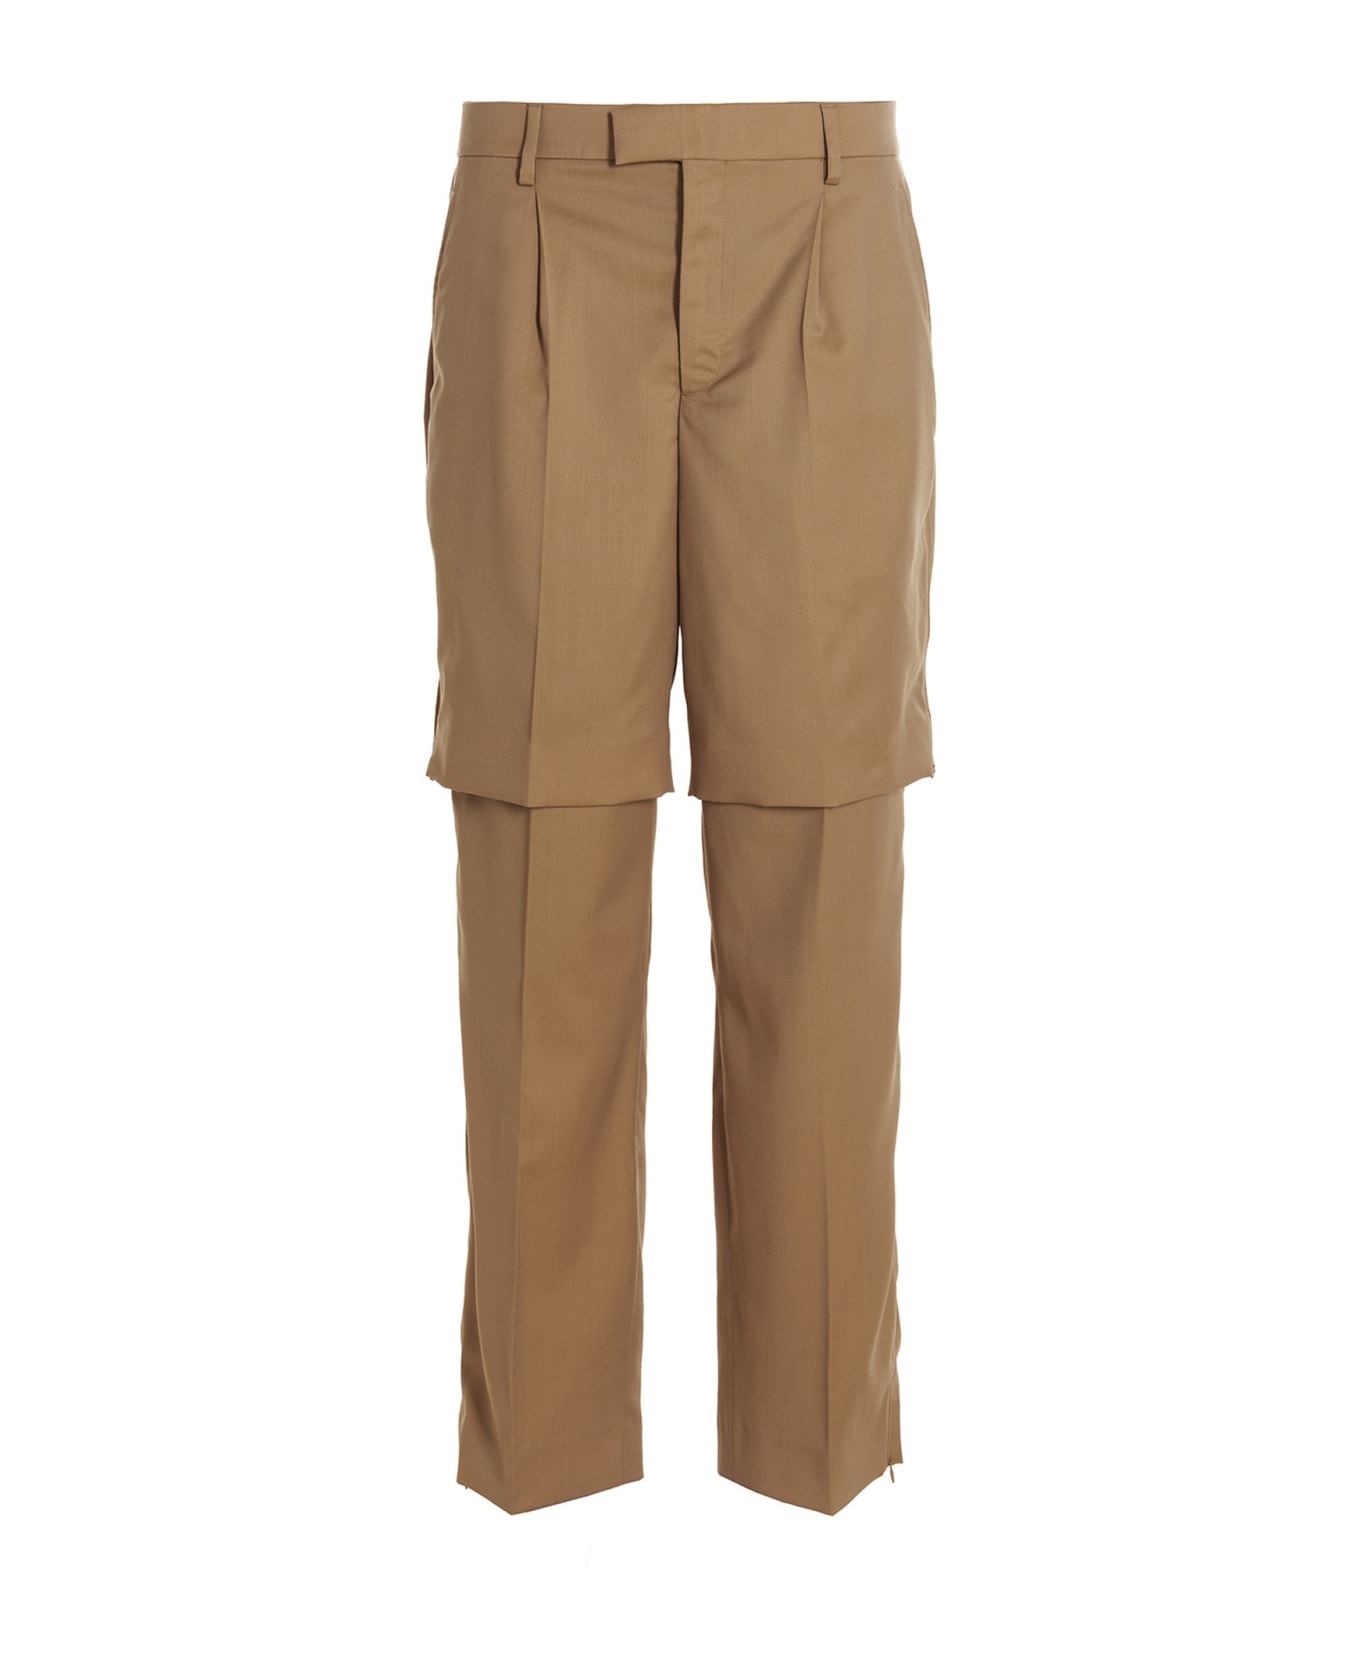 VTMNTS Tailored Pants - Beige